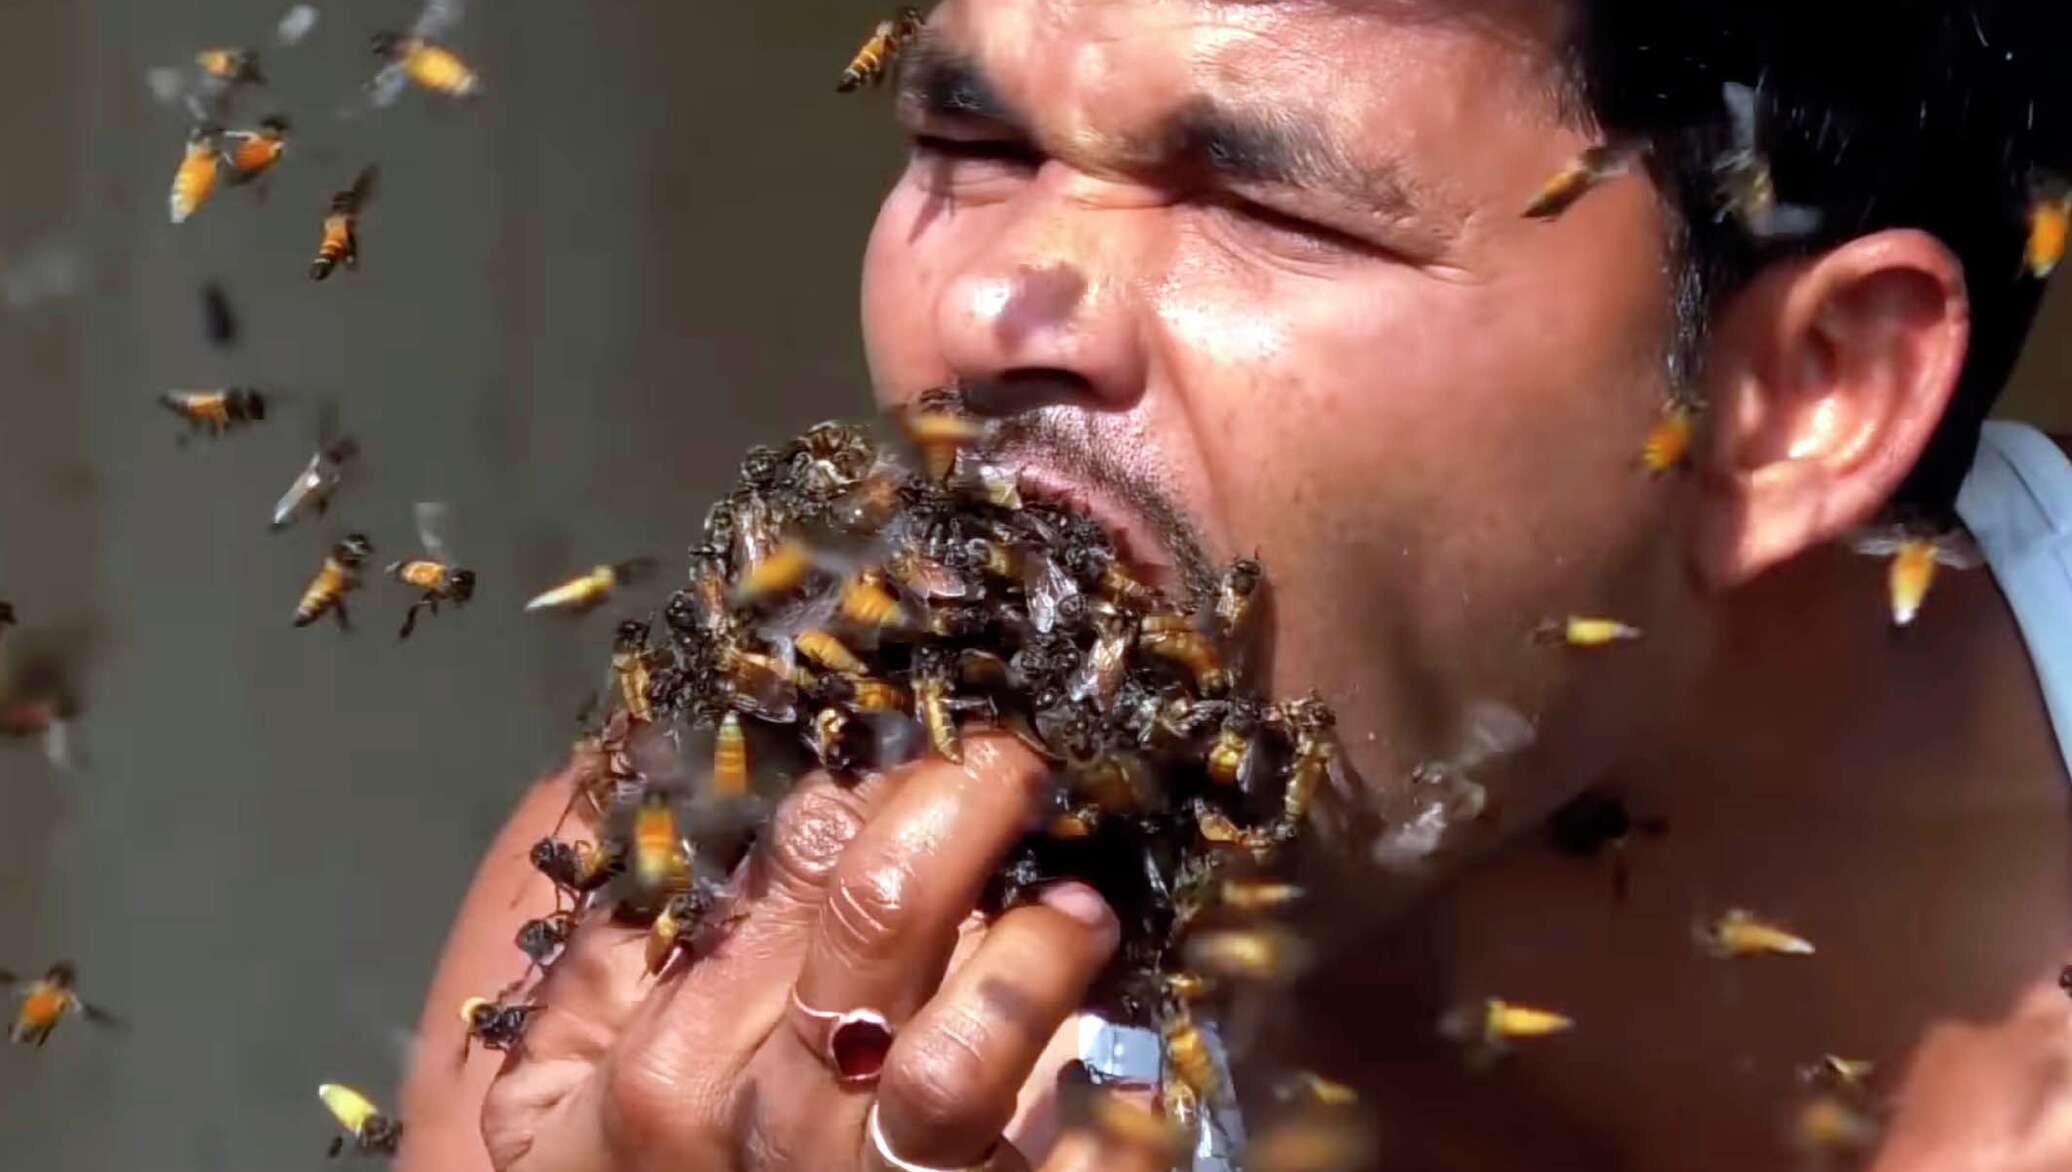 Фото лица пчелы